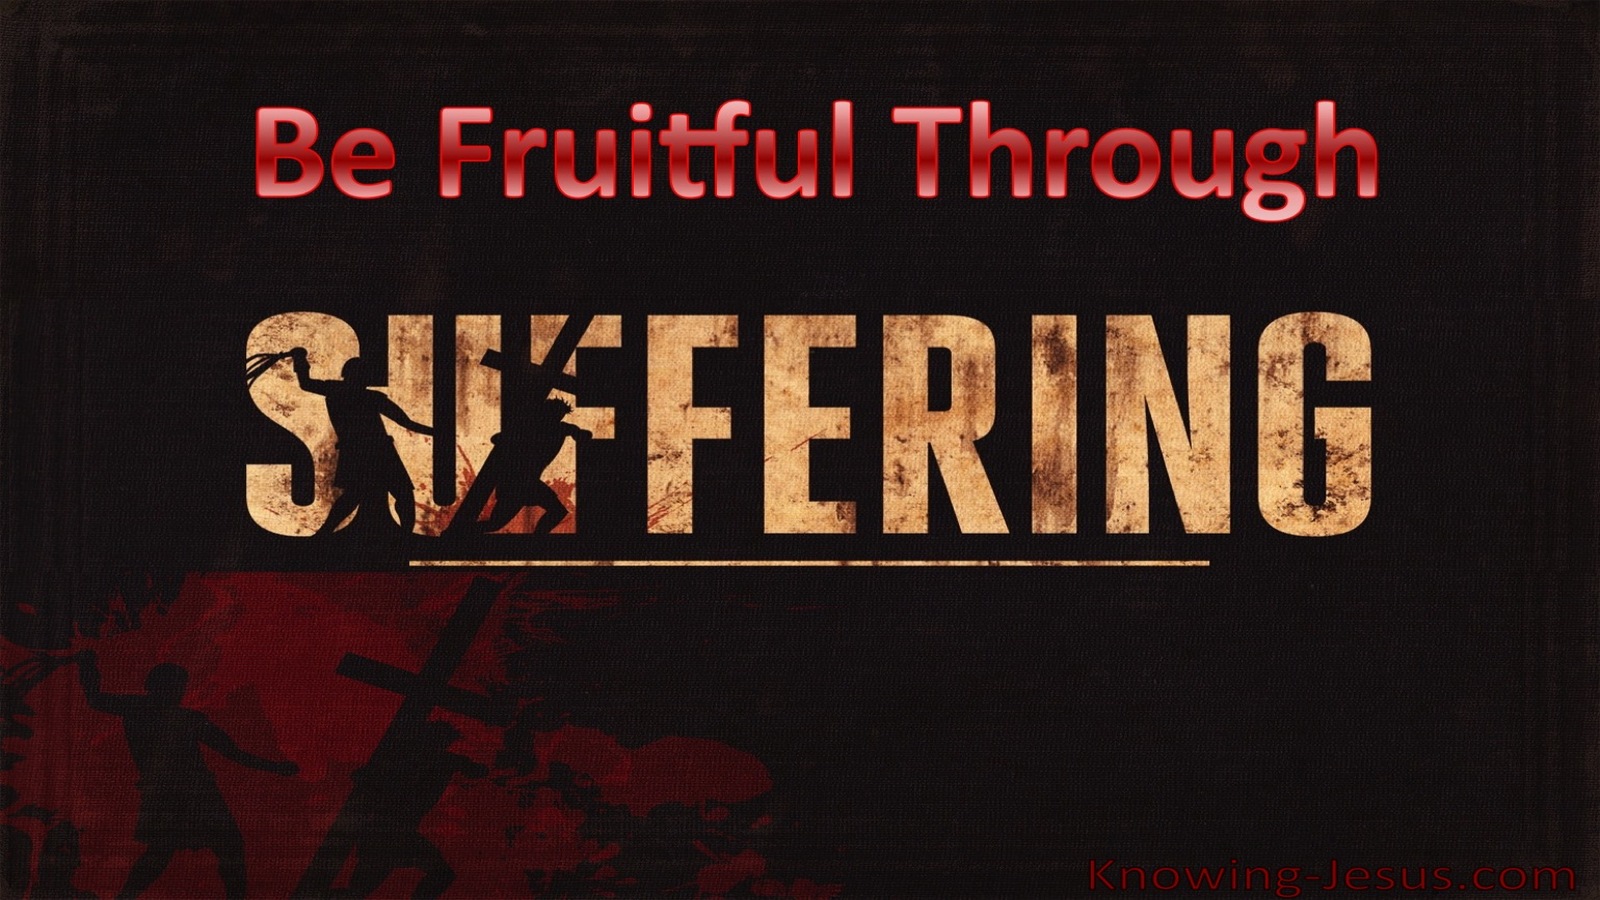 Be Fruitful Through Suffering (devotional)